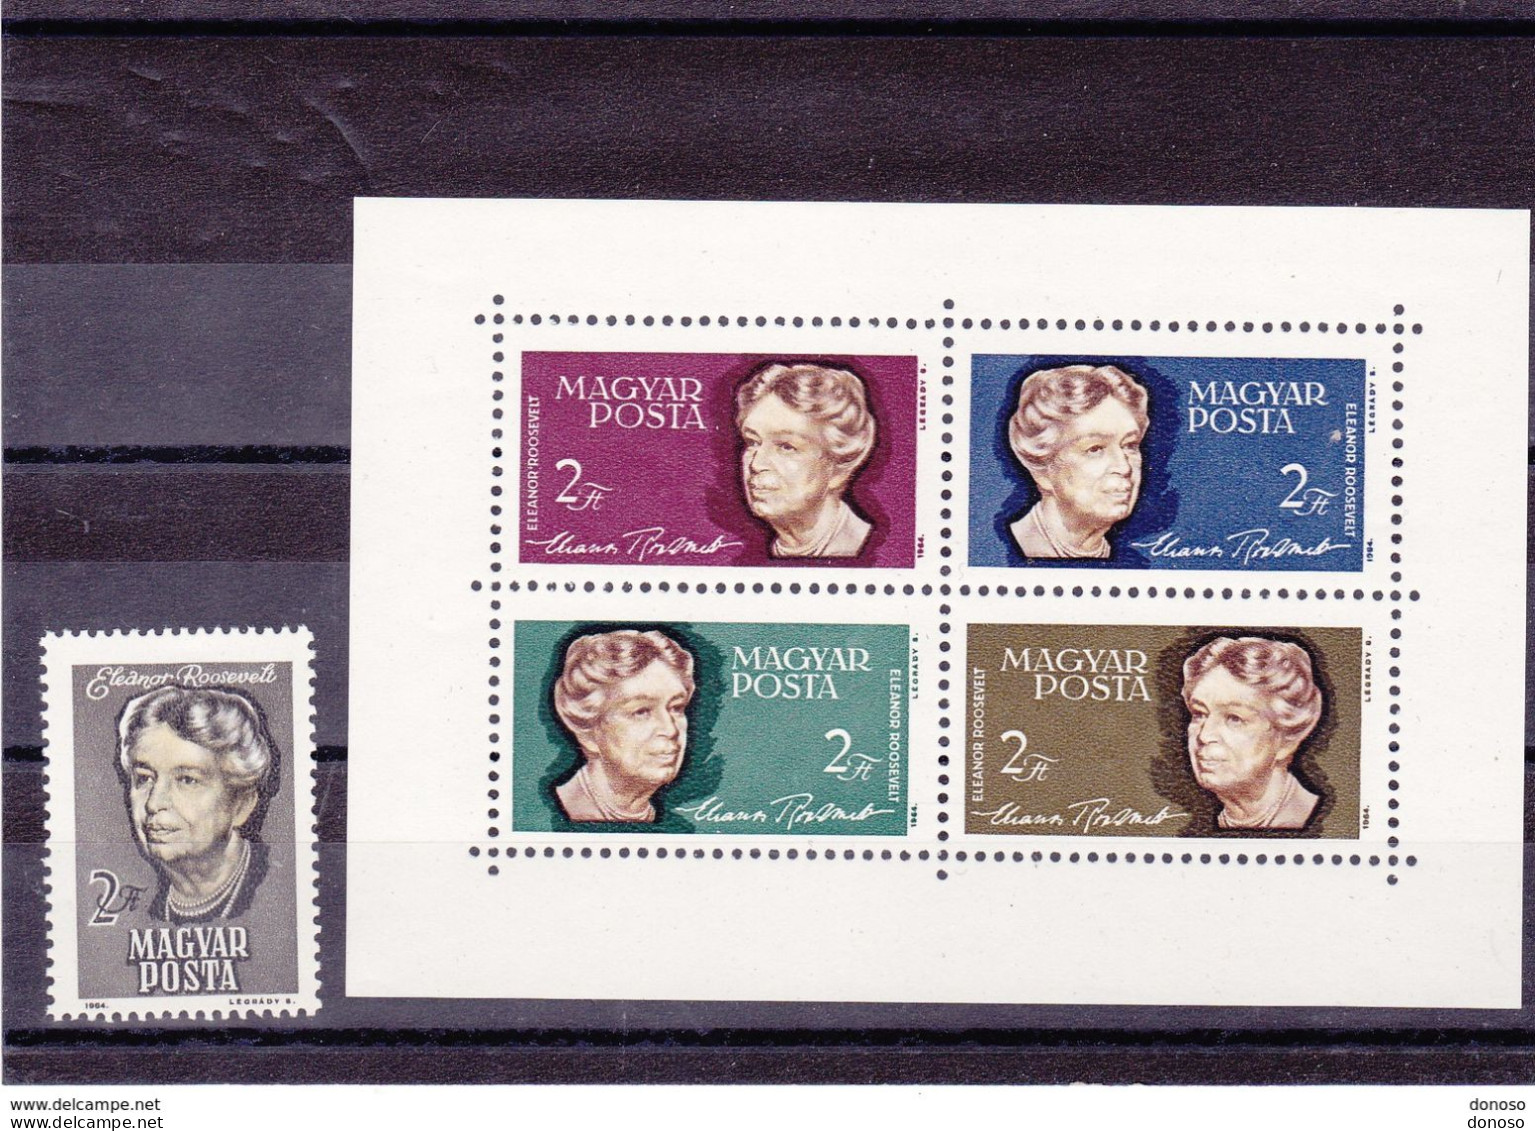 HONGRIE 1964 Eleanor Roosevelt, Droits De L'homme Yvert 1639 + BF 47, Michel 2017 + Bl 41 NEUF** MNH - Unused Stamps